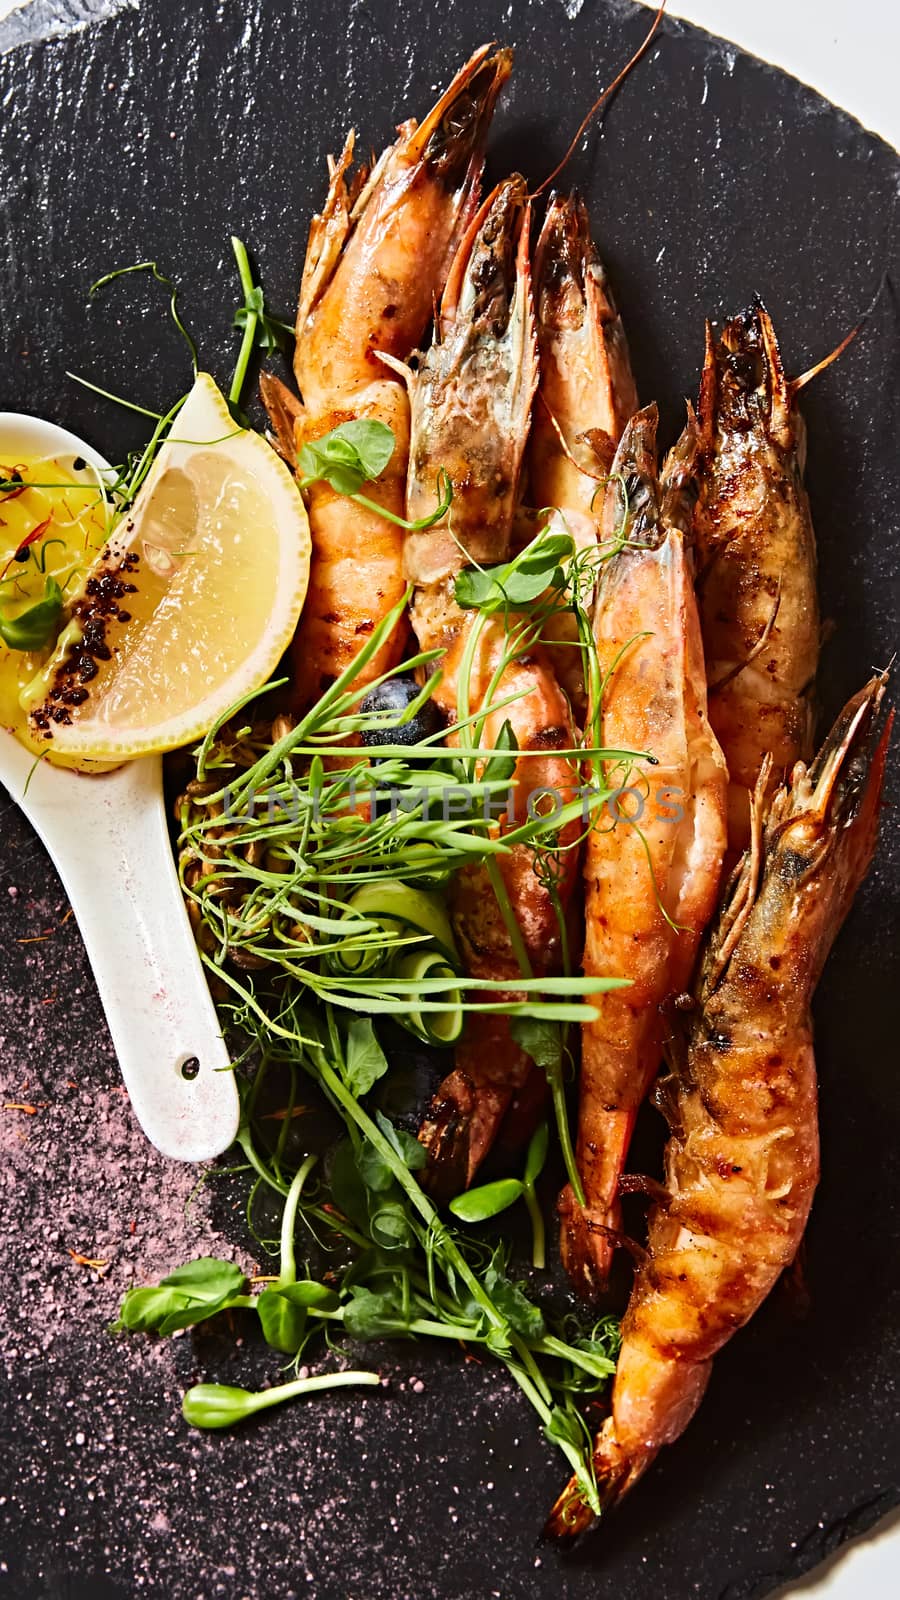 Grilled shrimp skewers. Seafood, shelfish. Shrimps Prawns skewers with herbs, garlic and lemon. Barbecue srimps prawns.